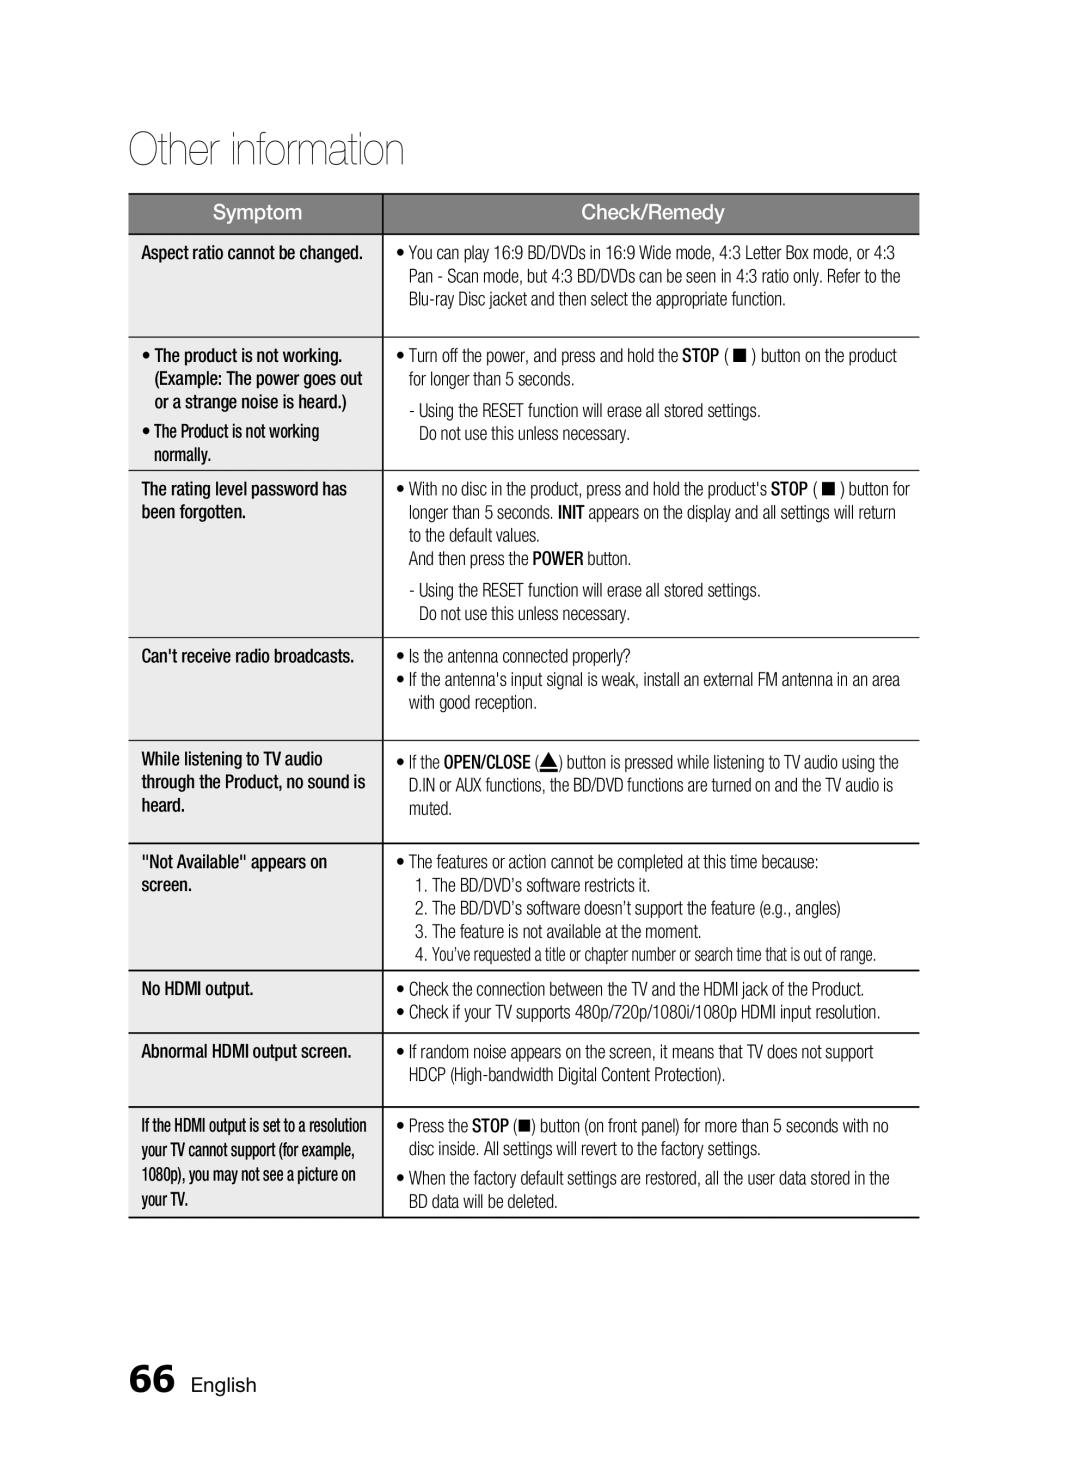 Samsung C6600 user manual English, Other information, Symptom, Check/Remedy 